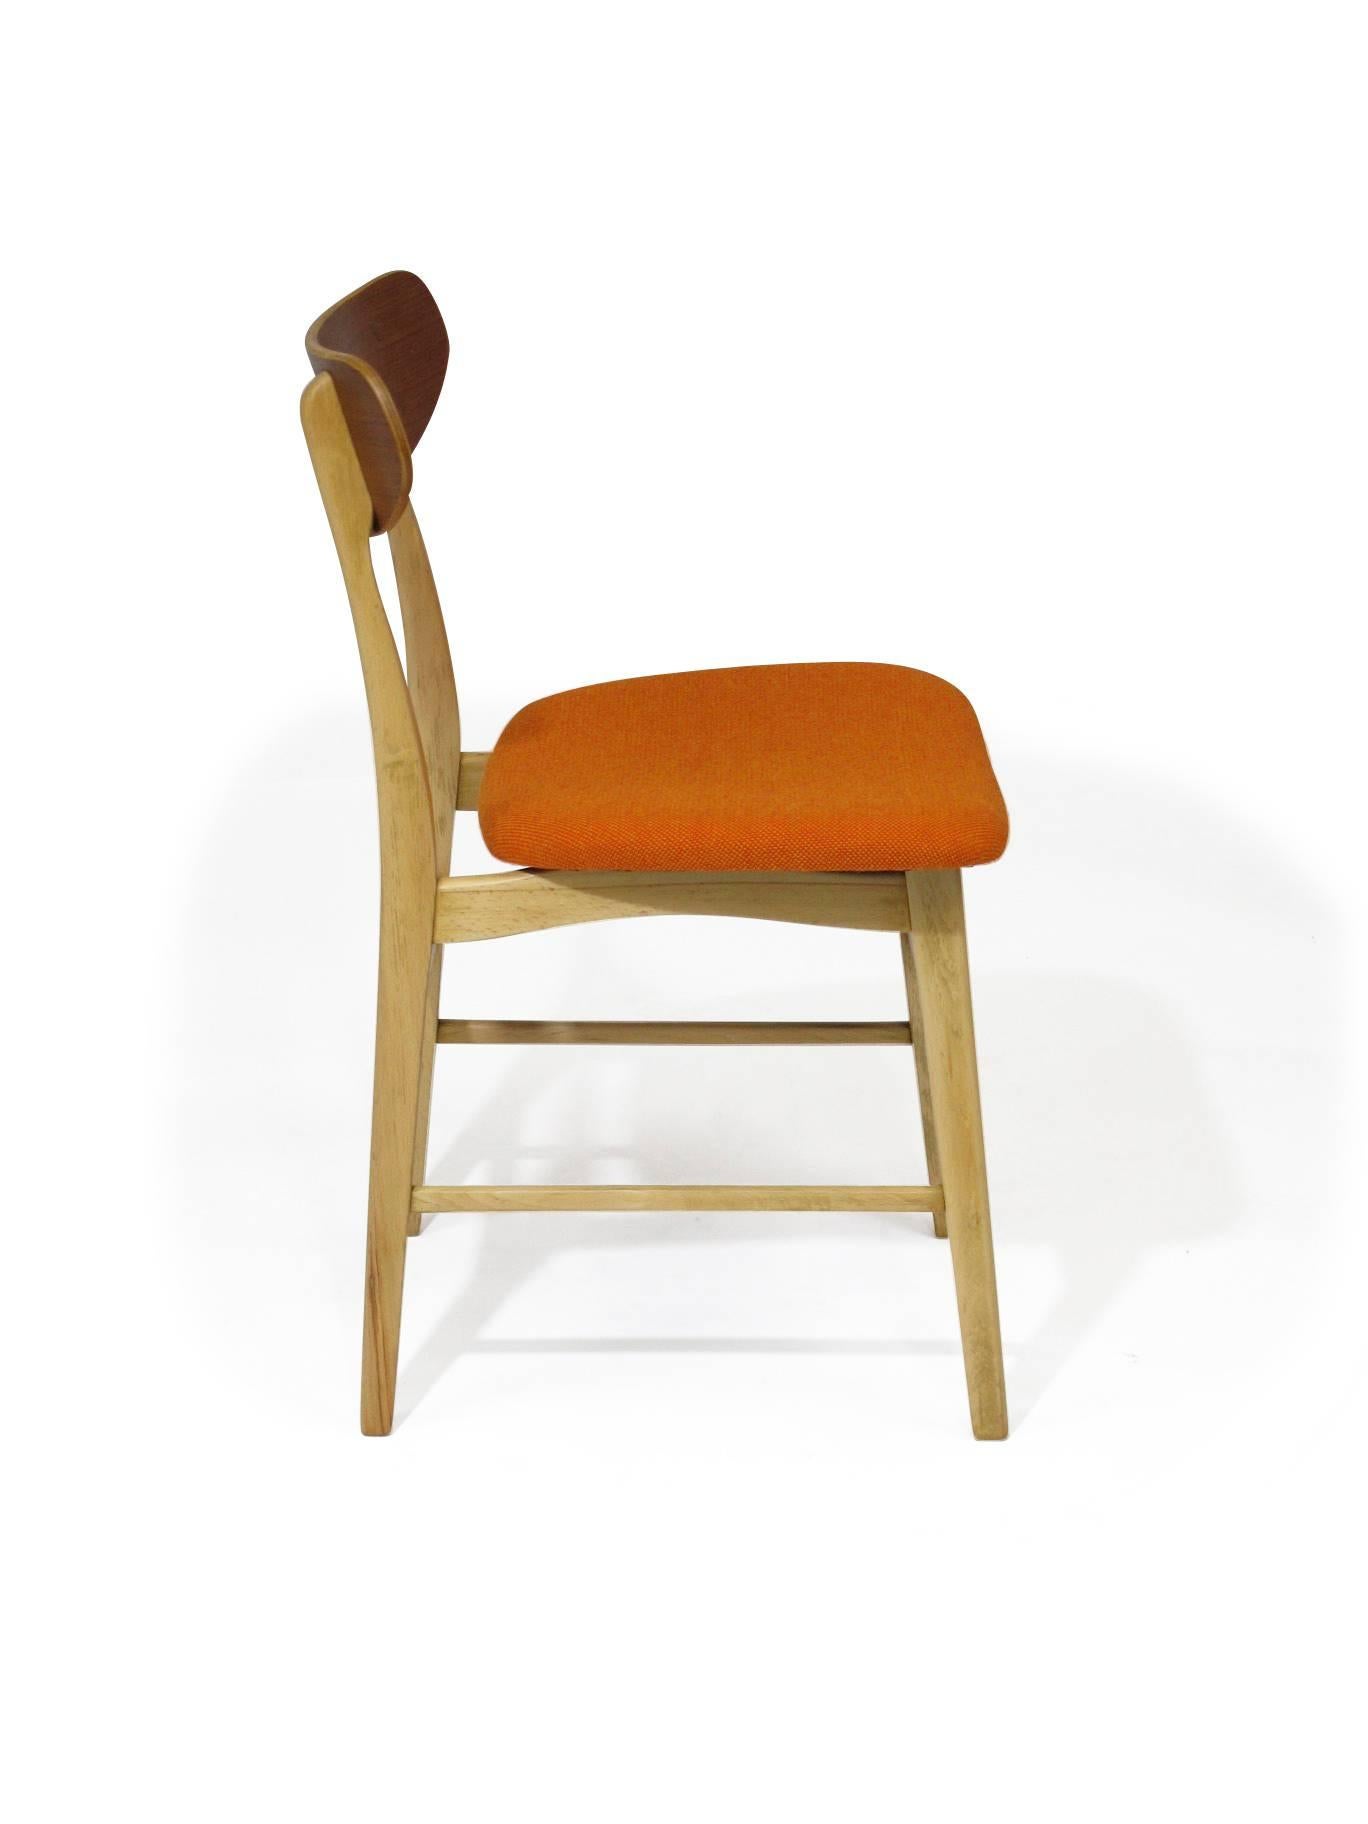 Basic Danish Teak and Beech Dining Chairs with New Orange Seats 1